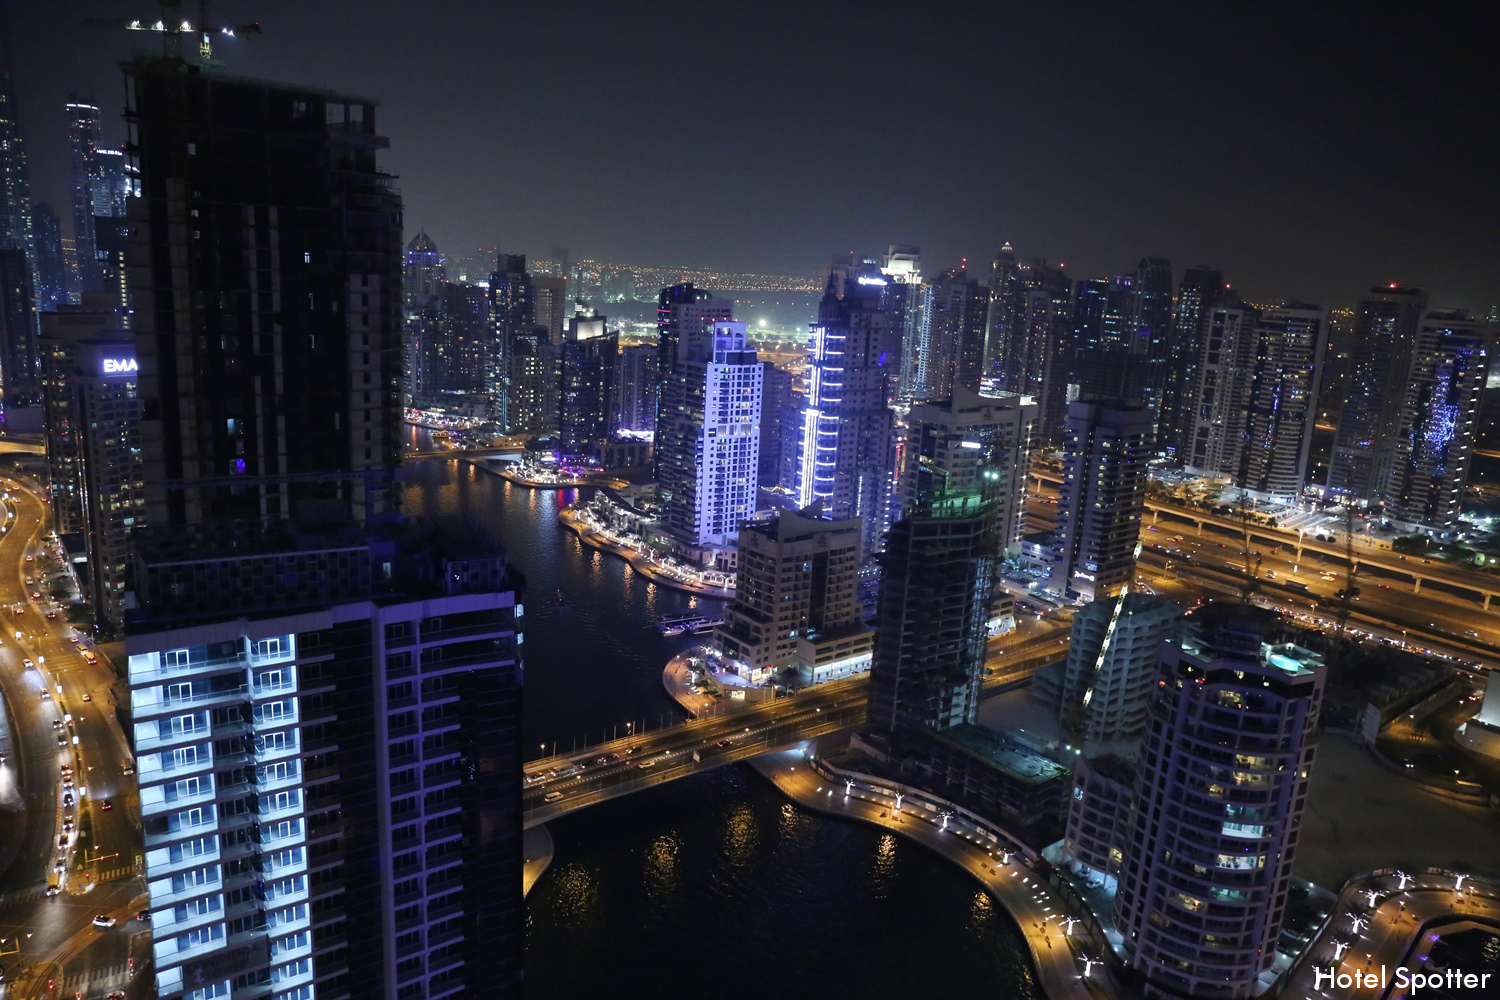 InterContinental Dubai Marina - recenzja hotelu - widok z club lounge